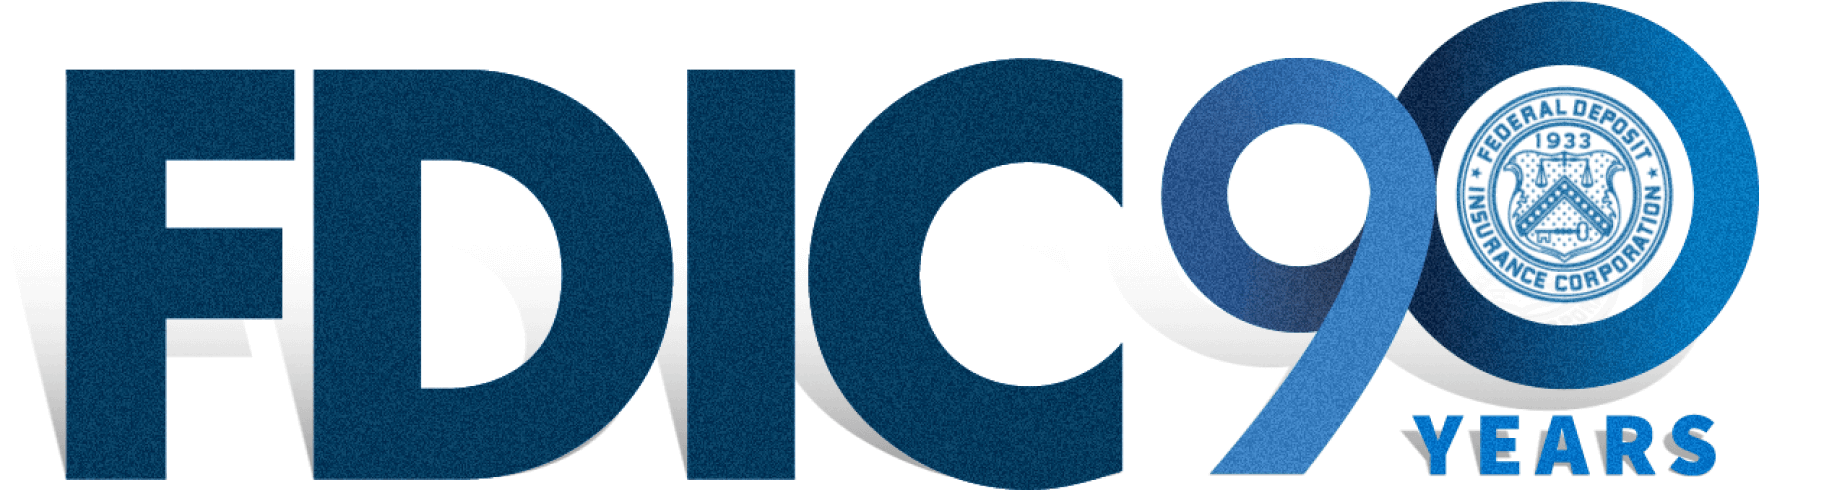 FDIC 90 Years Logo